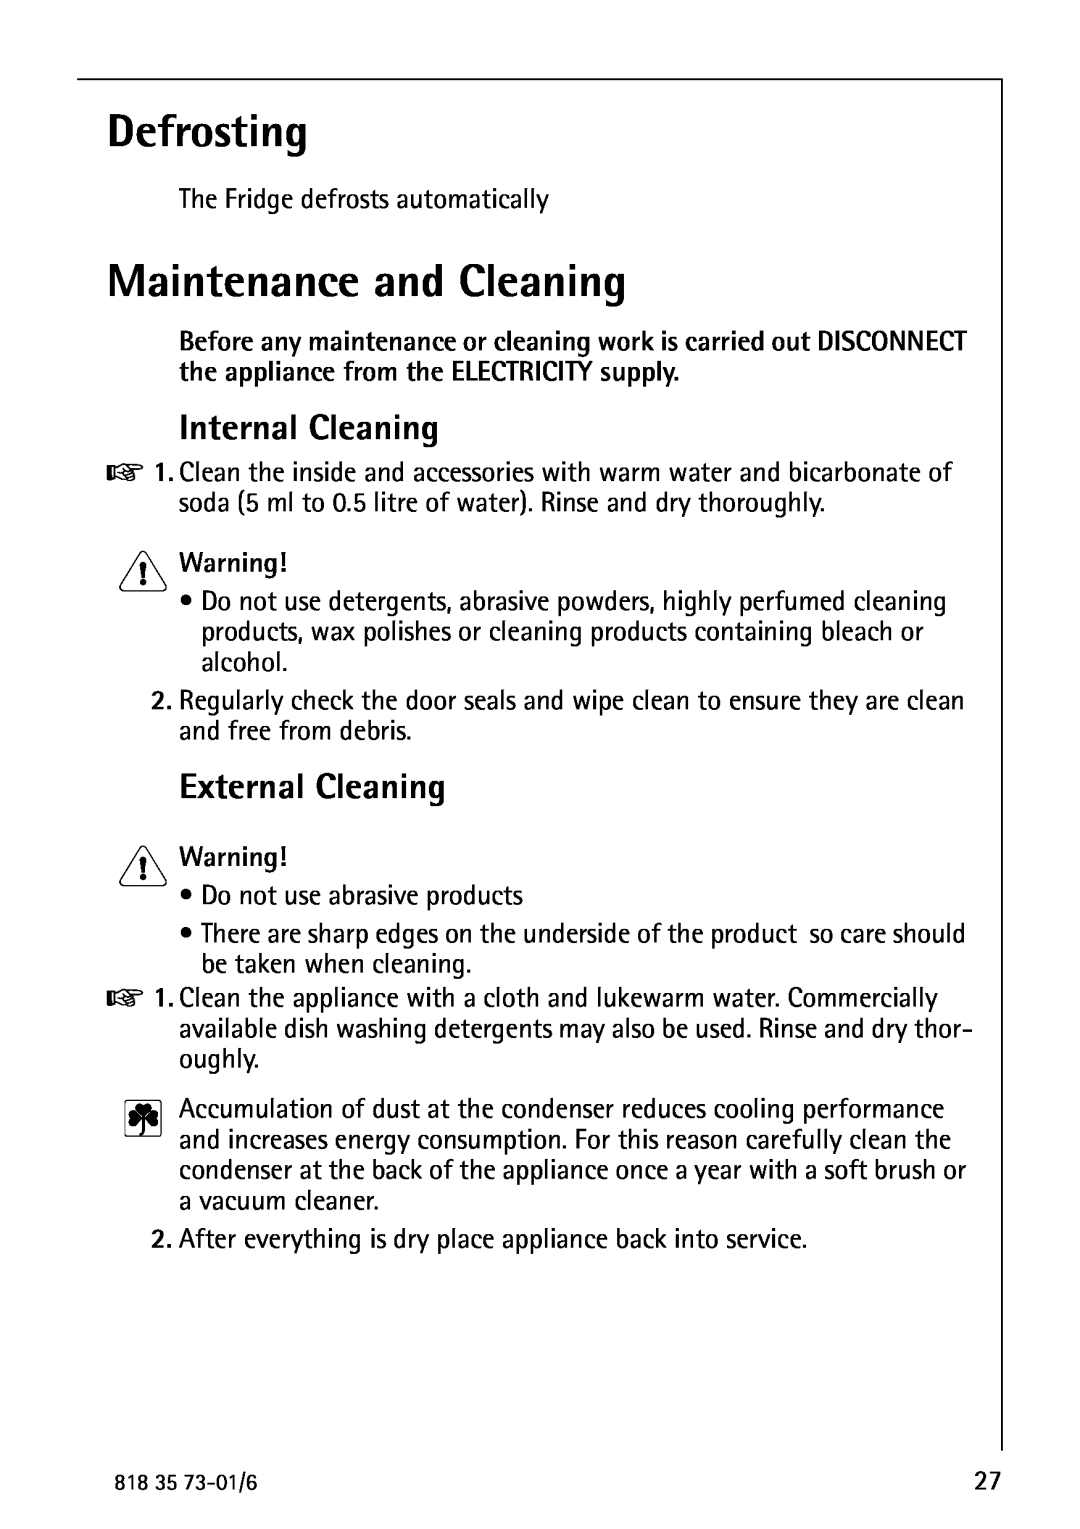 Electrolux SANTO 72340 KA Defrosting, Maintenance and Cleaning, Internal Cleaning, External Cleaning, Warning 